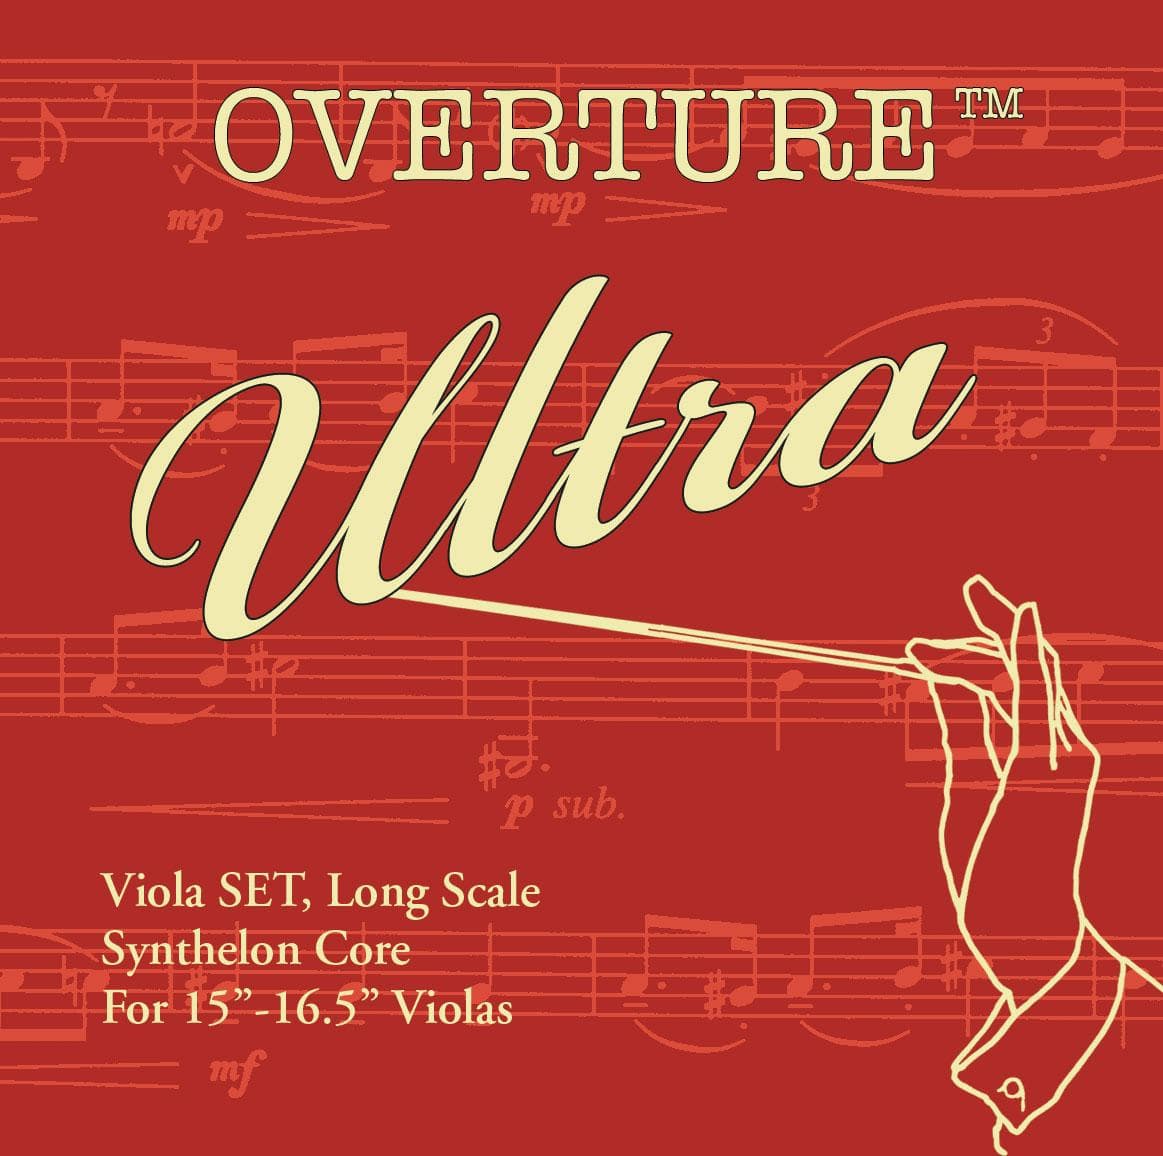 Overture Ultra Viola String Set Long Scale 15-16.5